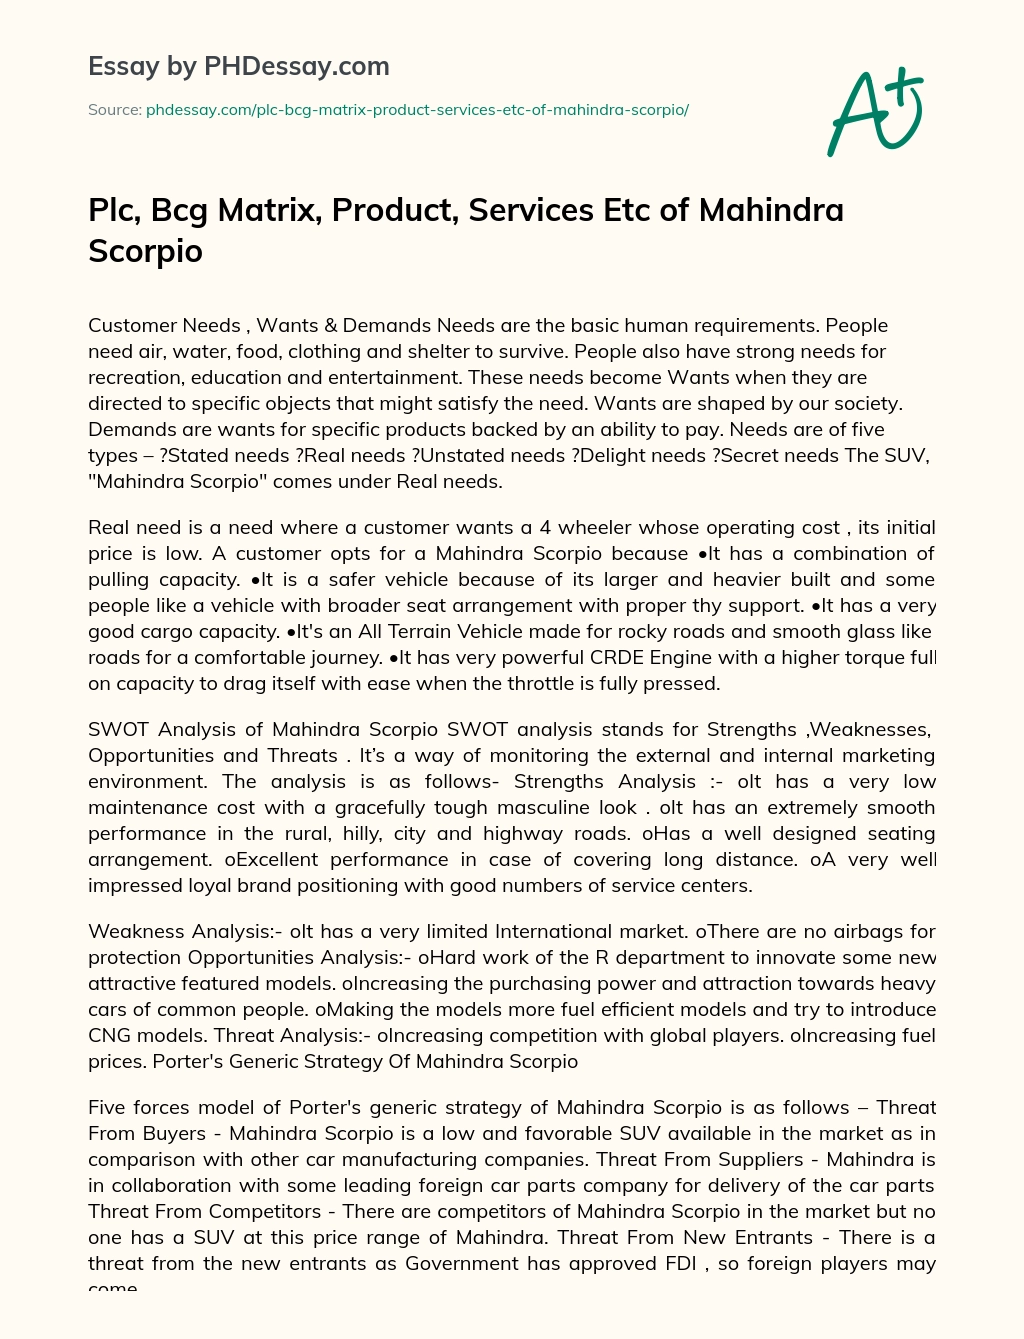 Plc, Bcg Matrix, Product, Services Etc of Mahindra Scorpio essay